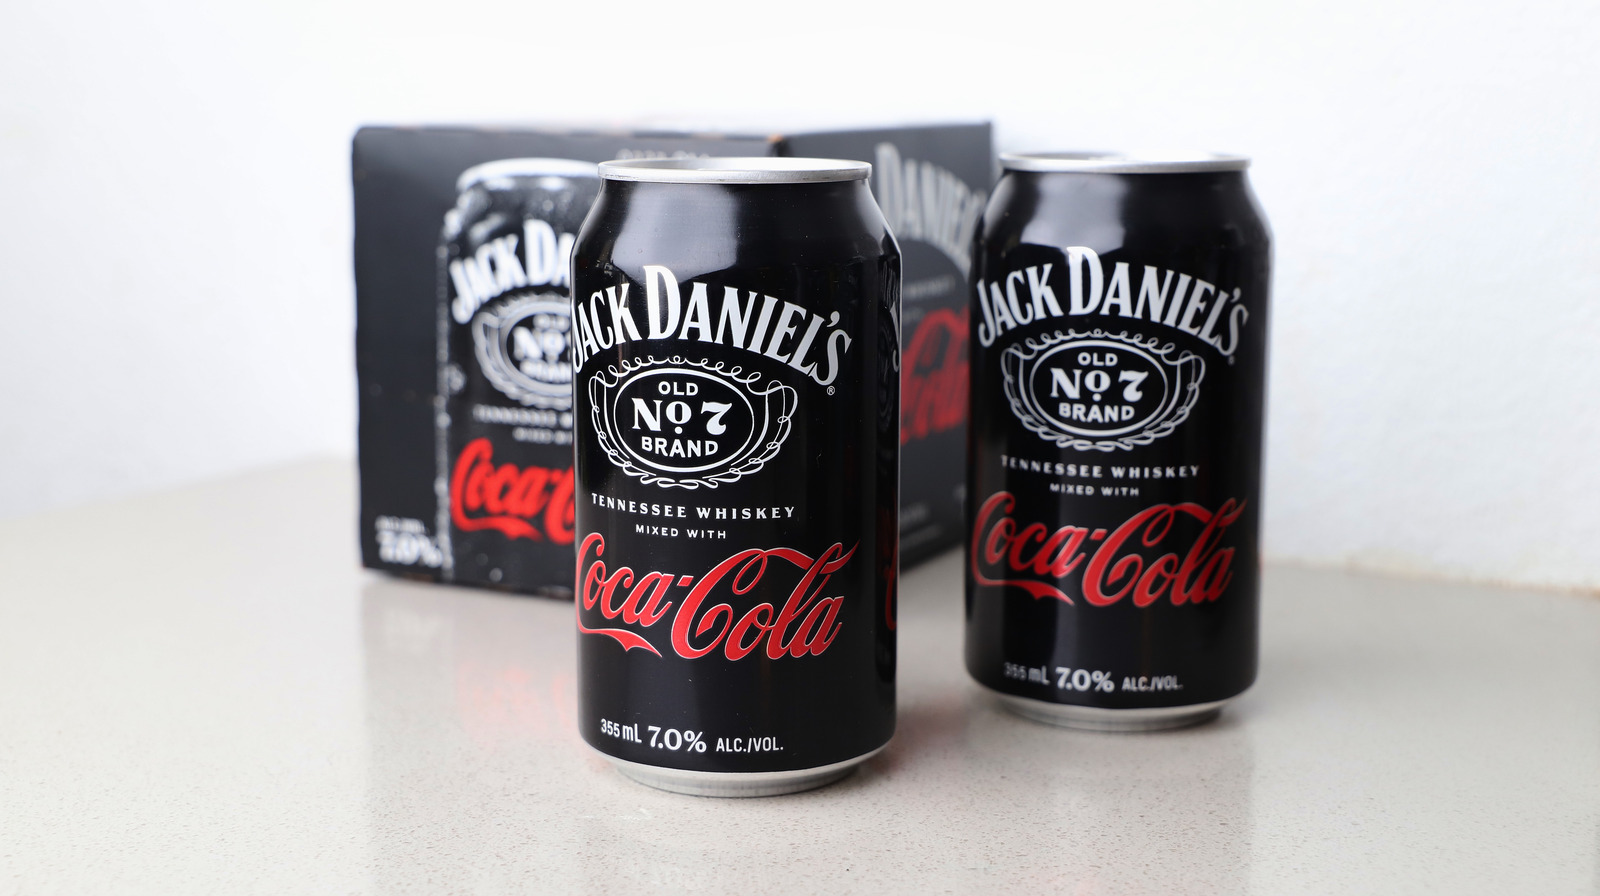 Jack can well. Jack & Coke. Джек Дэниэлс и Кока кола Грузовики. Кока кола с Джек Дэниэлс в банках купить.